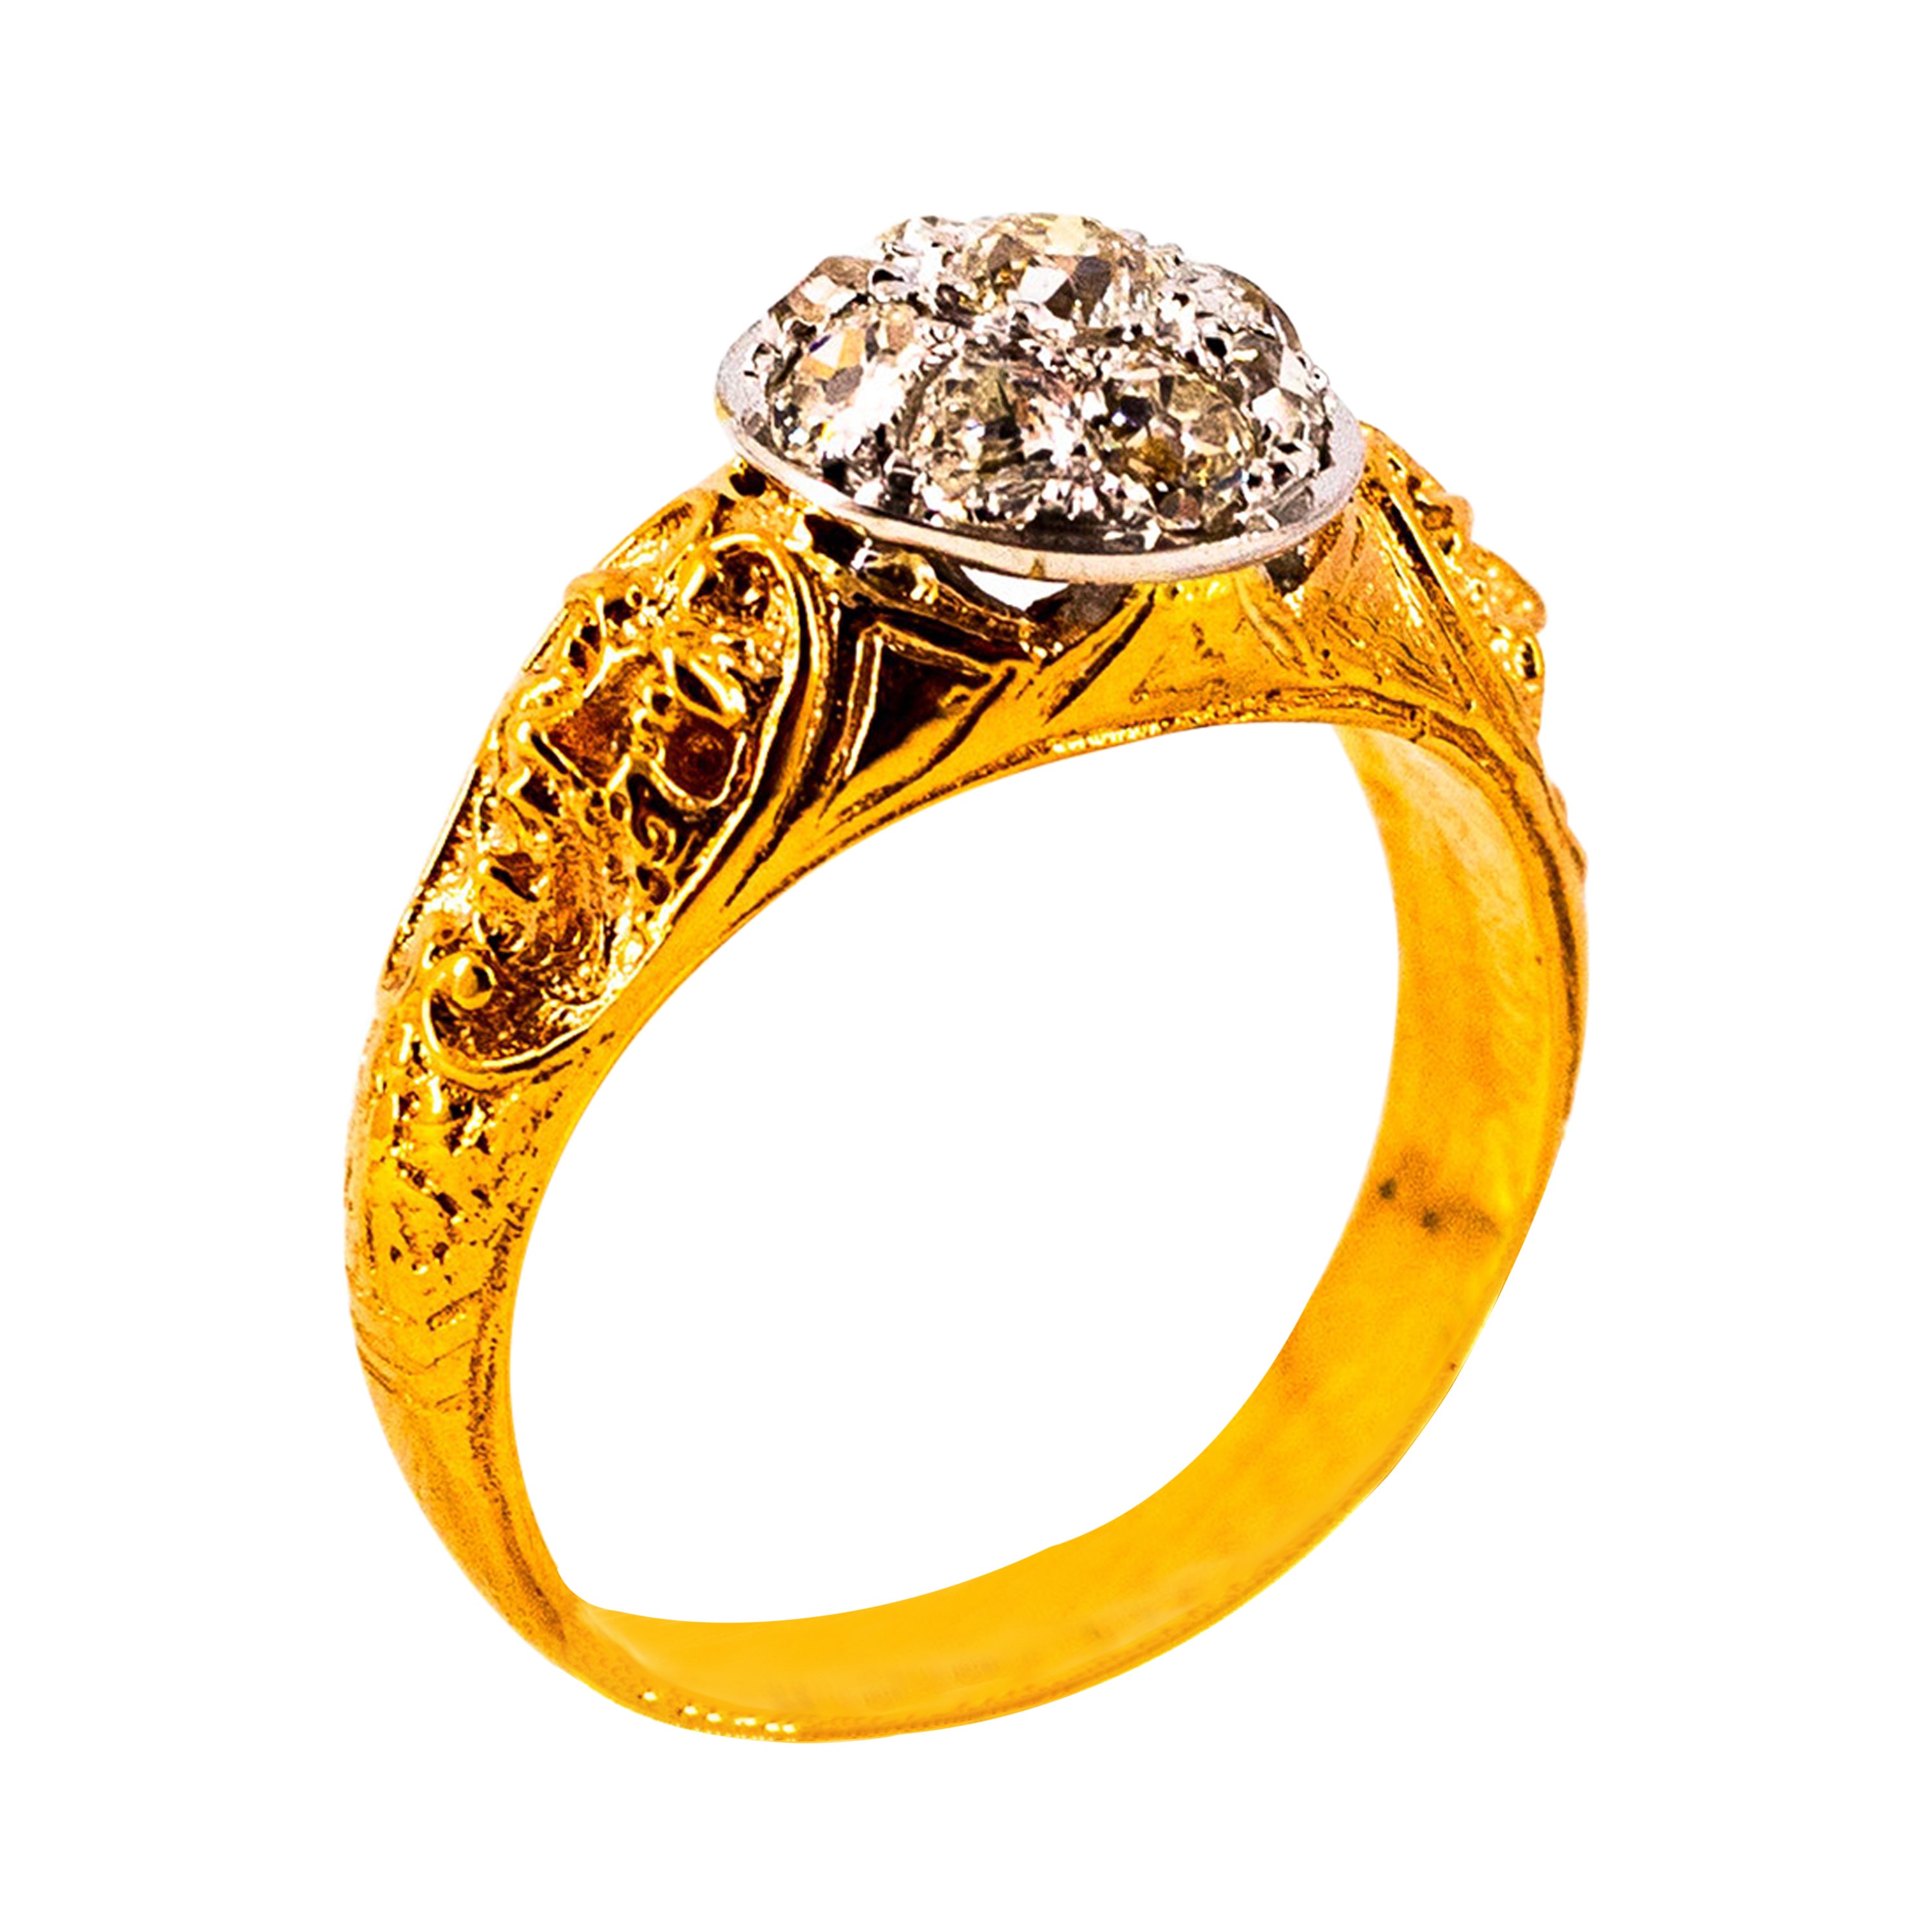 Art Nouveau 0.85 Carat White Old European Cut Diamond Yellow Gold Cocktail Ring